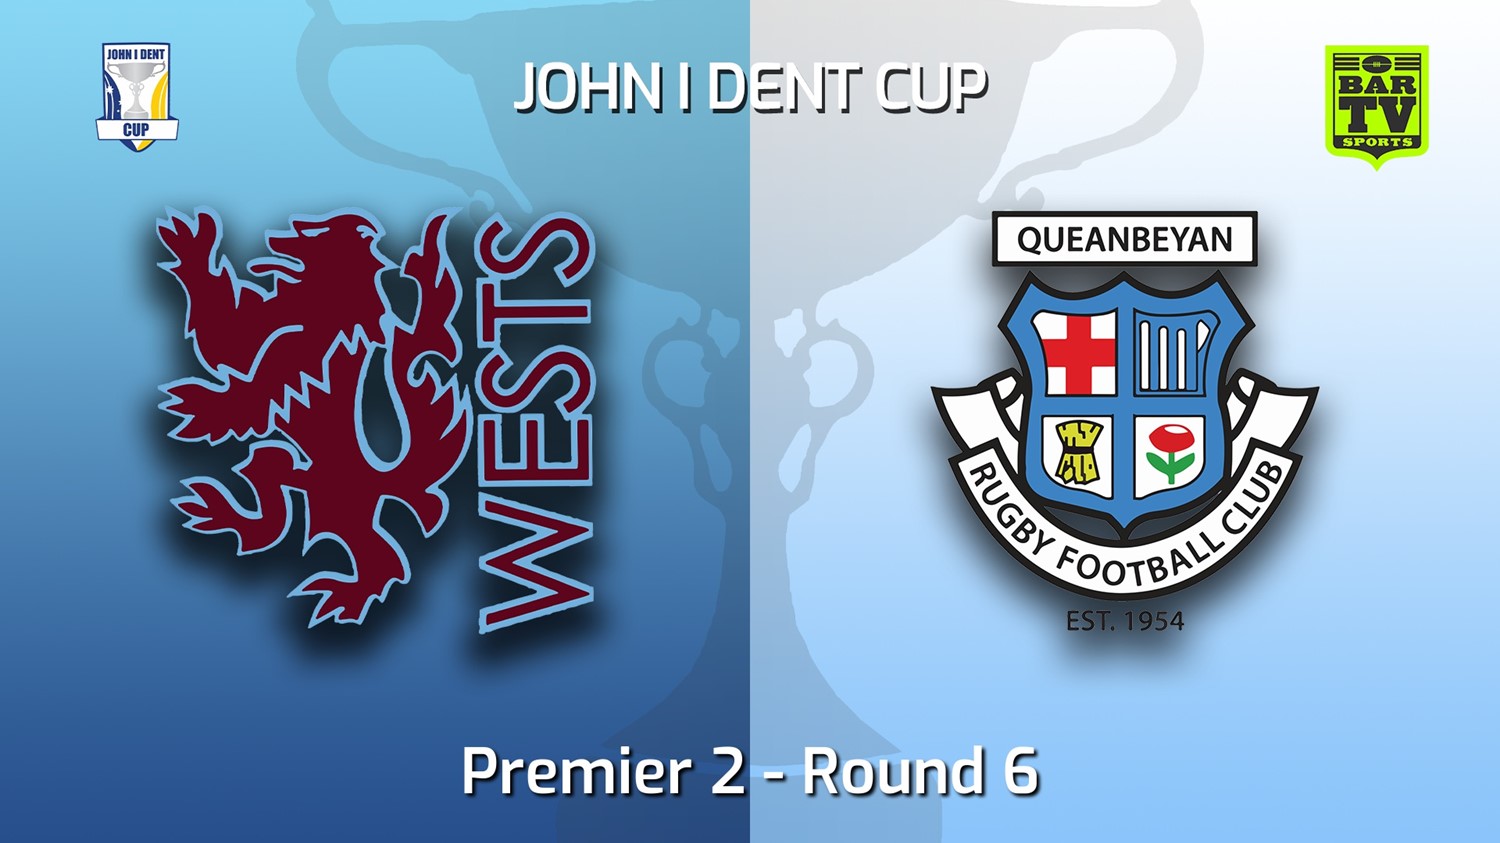 220528-John I Dent (ACT) Round 6 - Premier 2 - Wests Lions v Queanbeyan Whites Slate Image